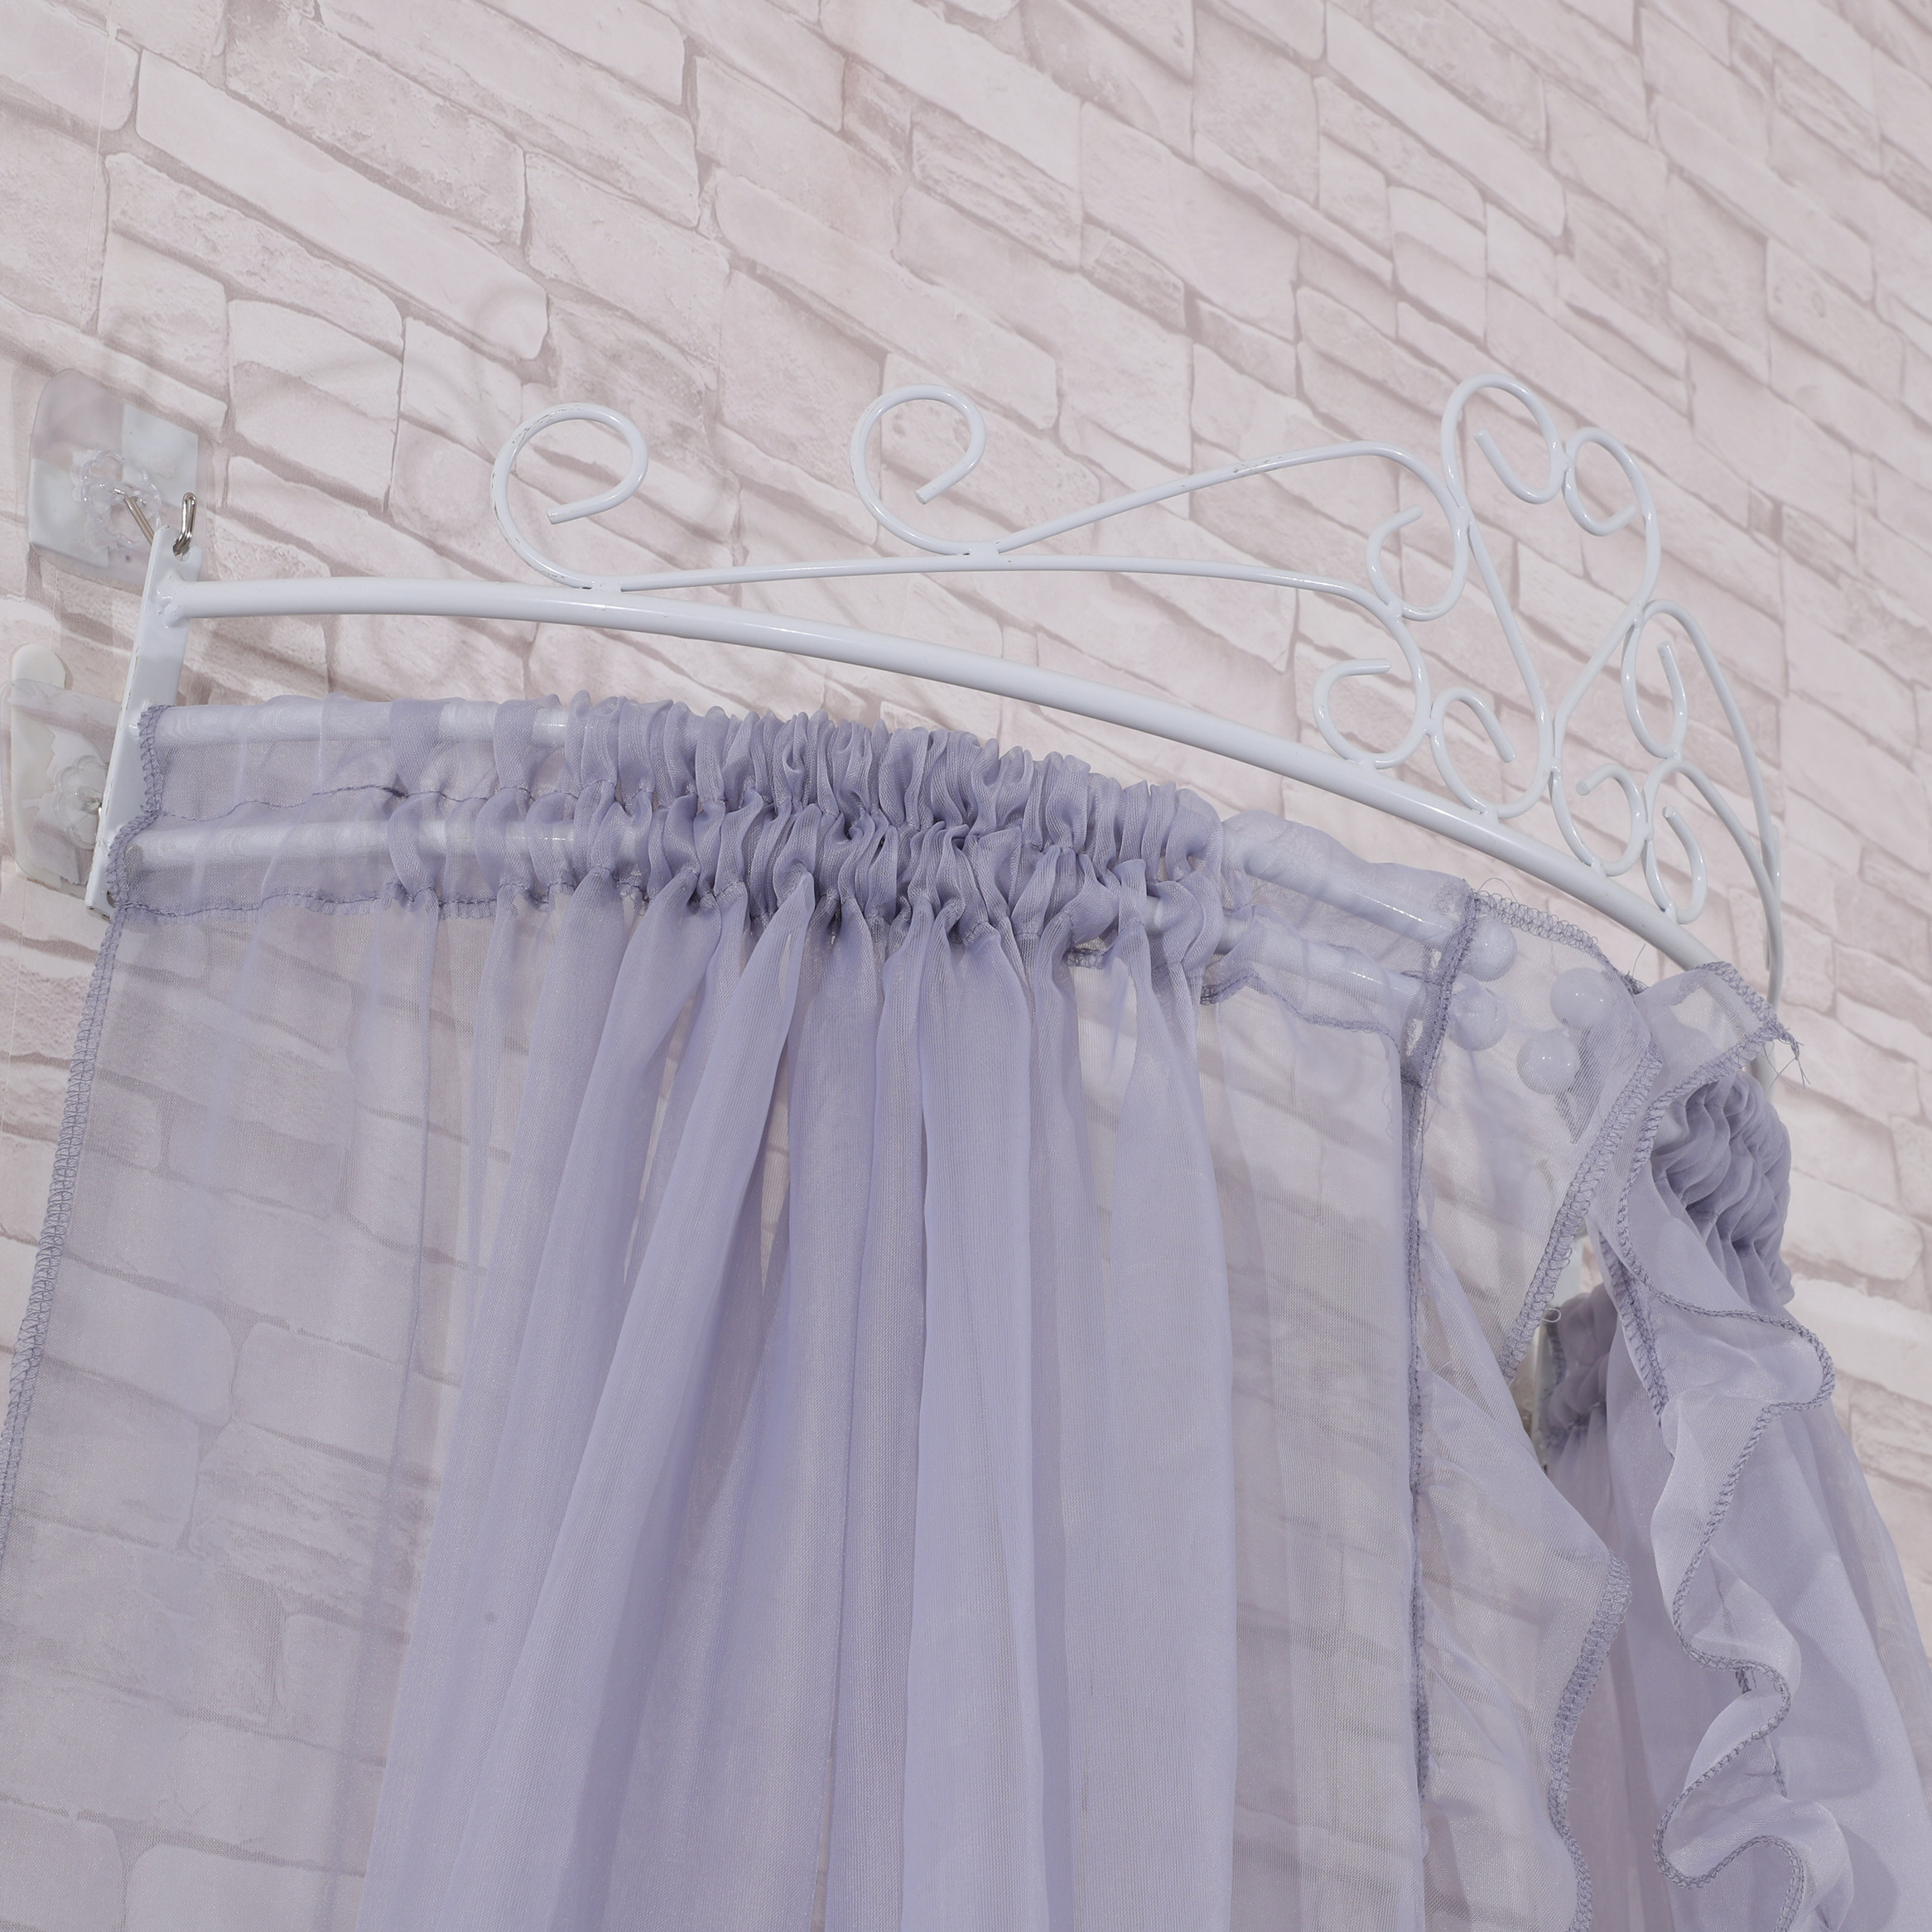 Moda de buena calidad princesa real gris corona cama manto dosel niñas encaje decorativo mosquitera